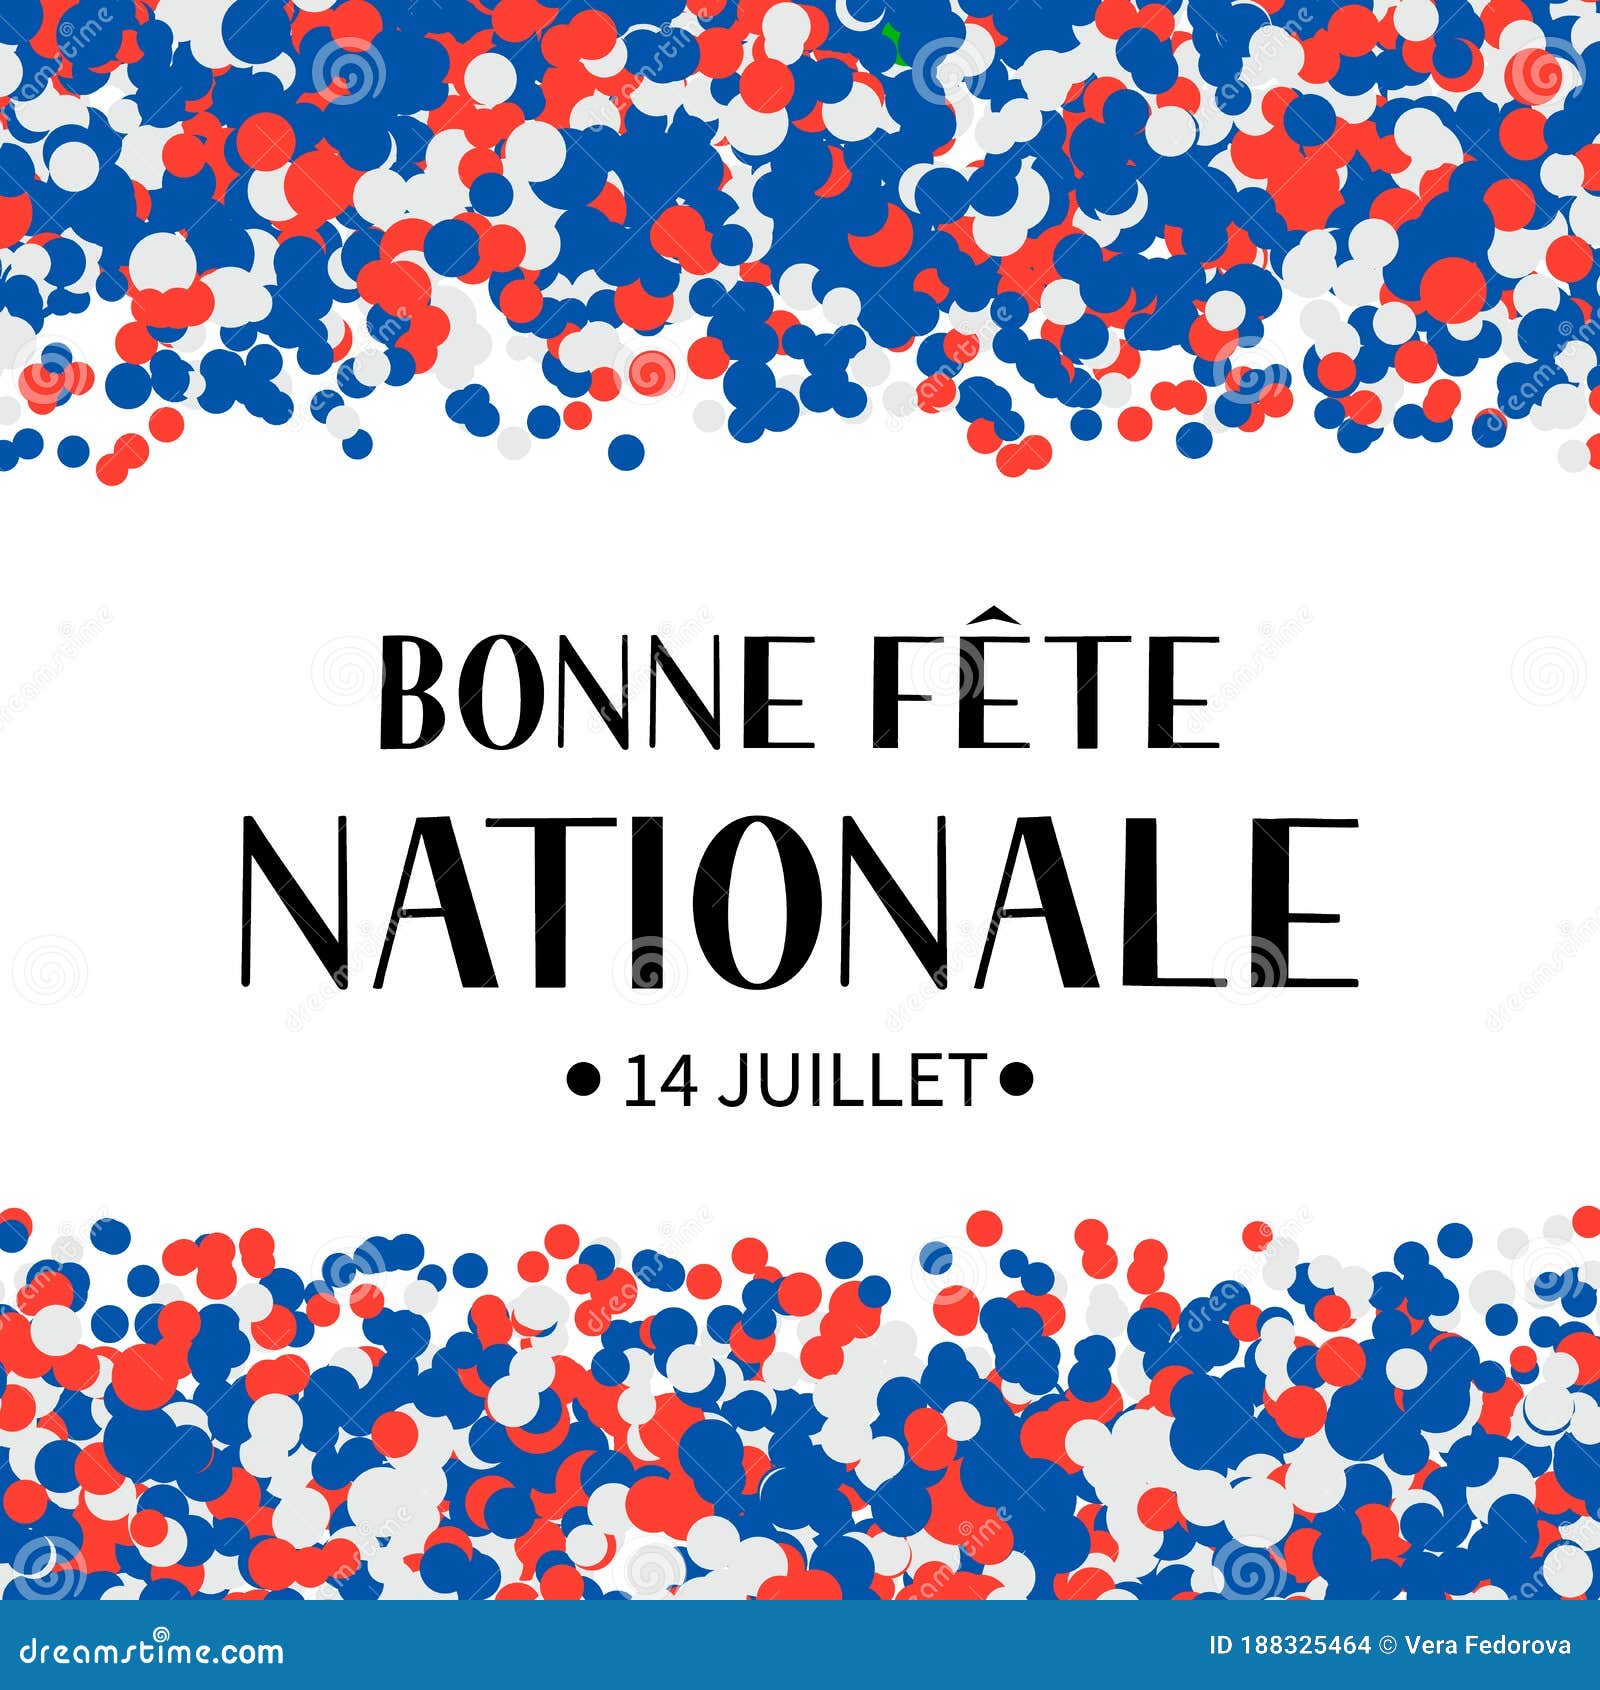 14 Juillet Bonne Fete Nationale French Lettering Banner Cartoon Vector